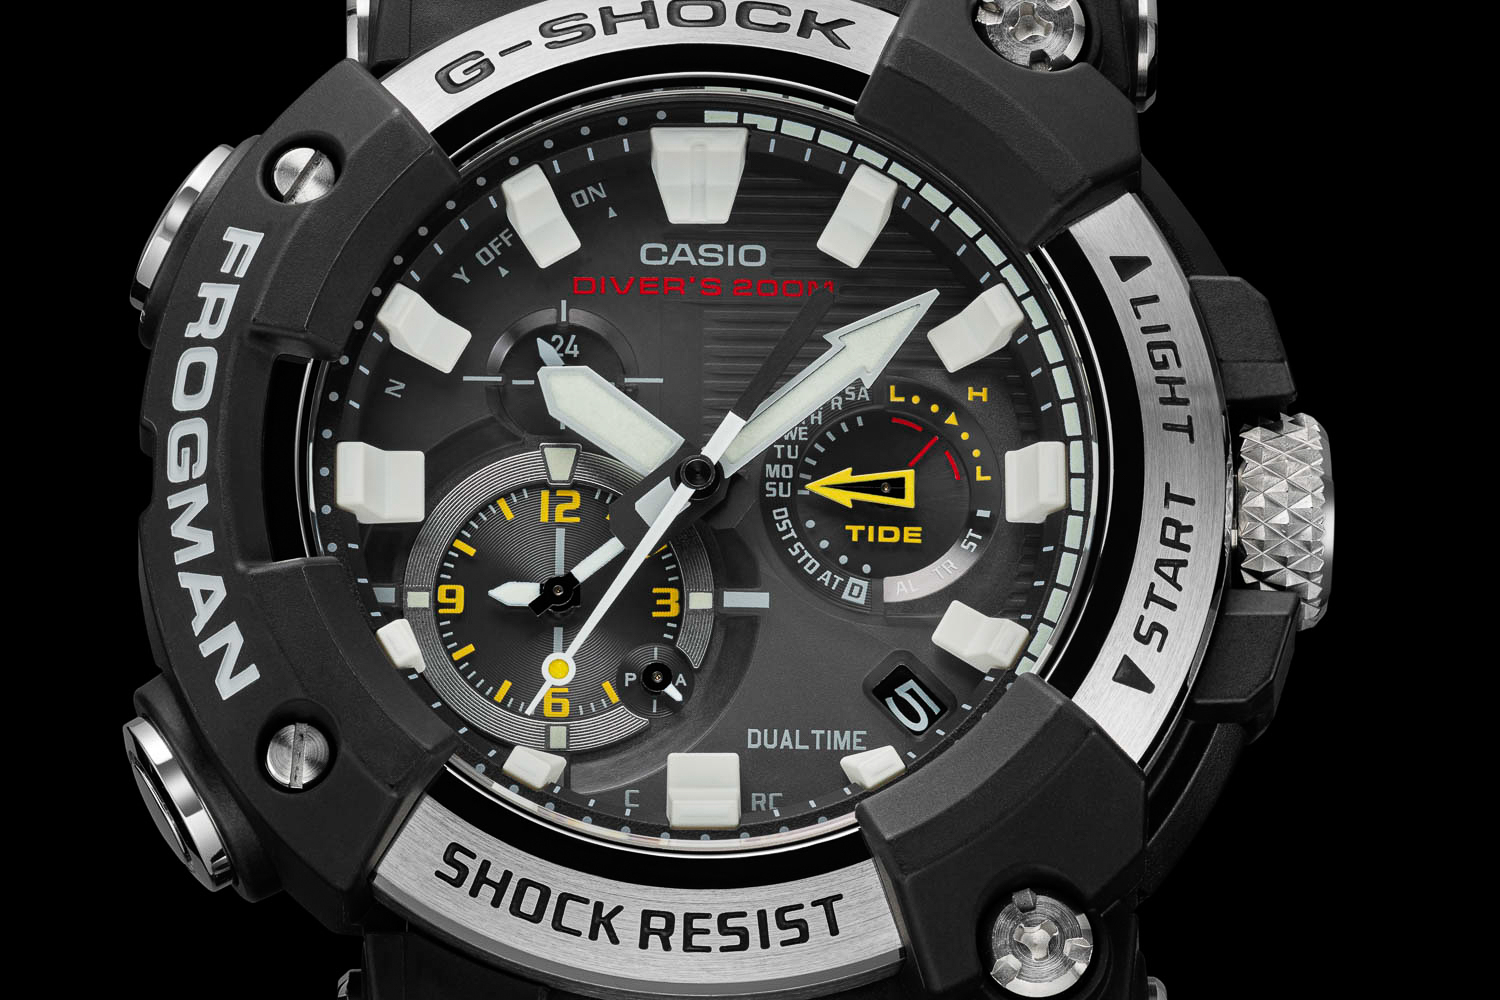 G Shock All Watches on Sale, 58% OFF | www.ingeniovirtual.com